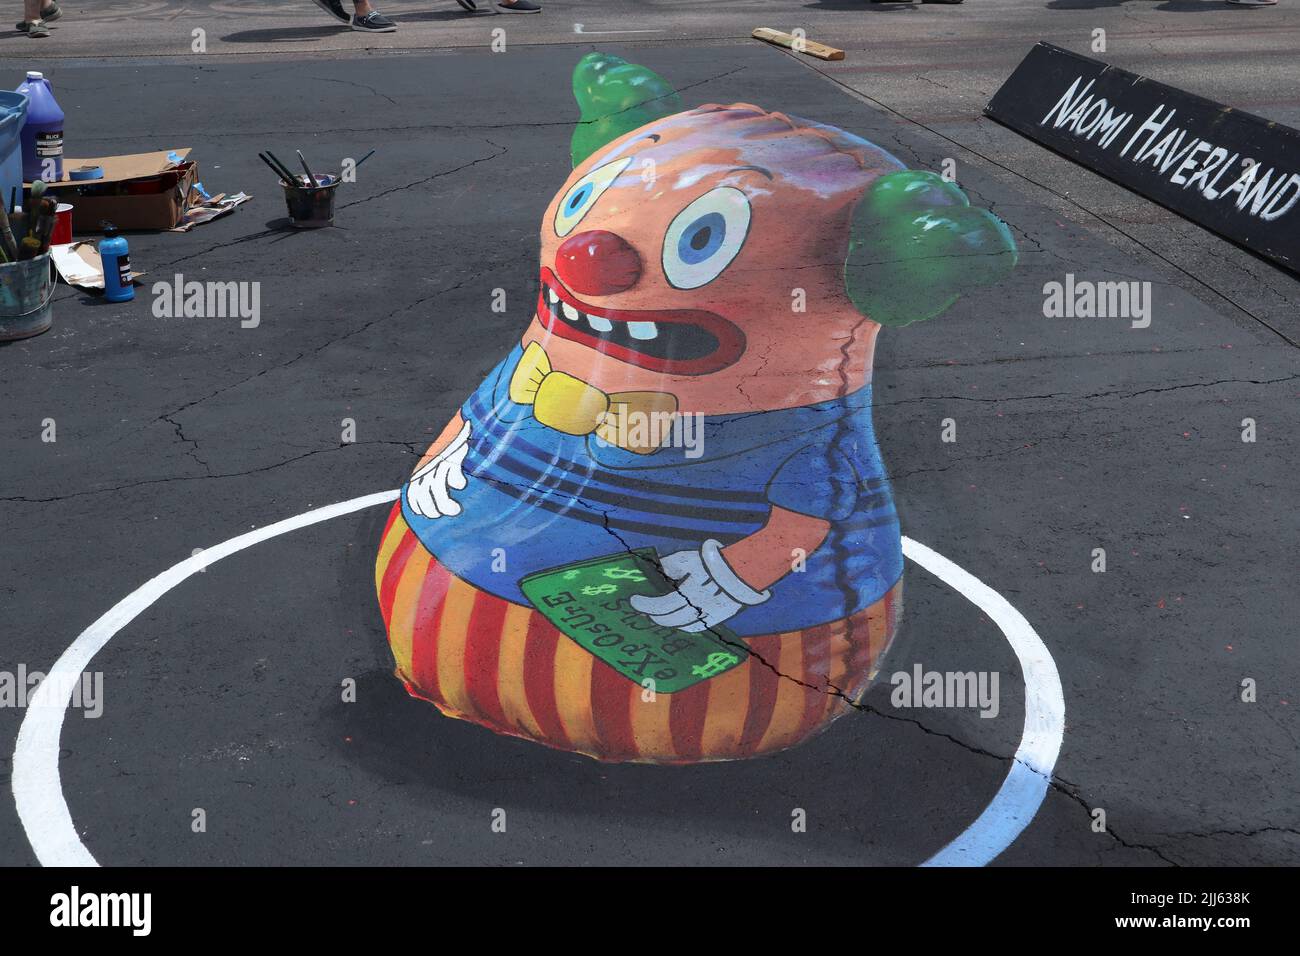 Sidewalk Chalk Art: Clown Punching Bag in 3D Stock Photo